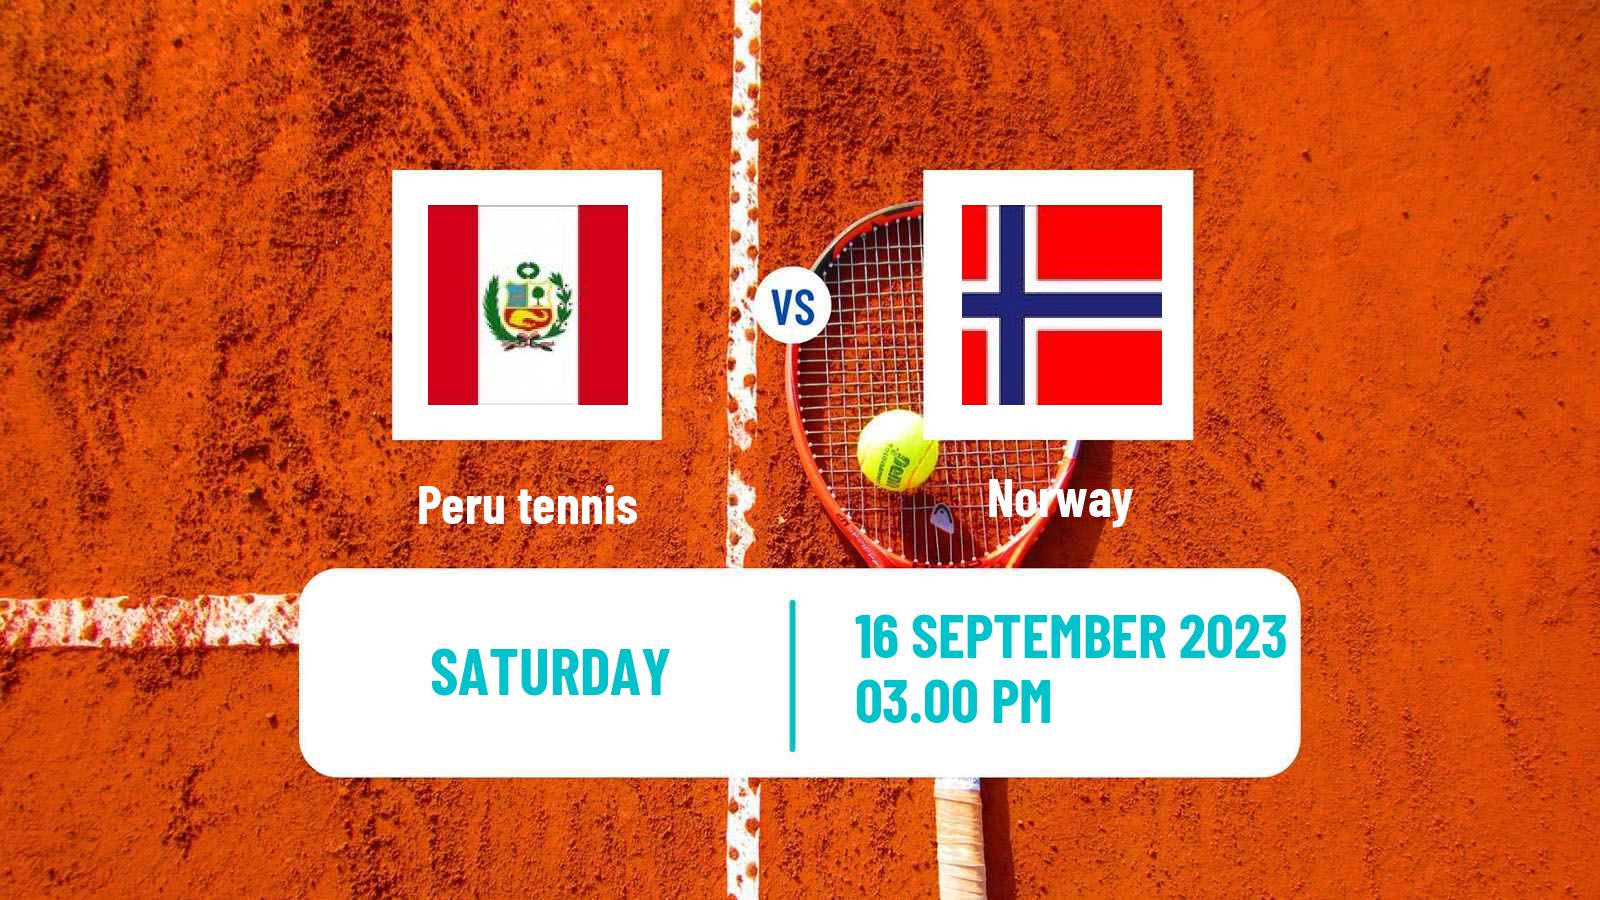 Tennis Davis Cup World Group I Teams Peru - Norway